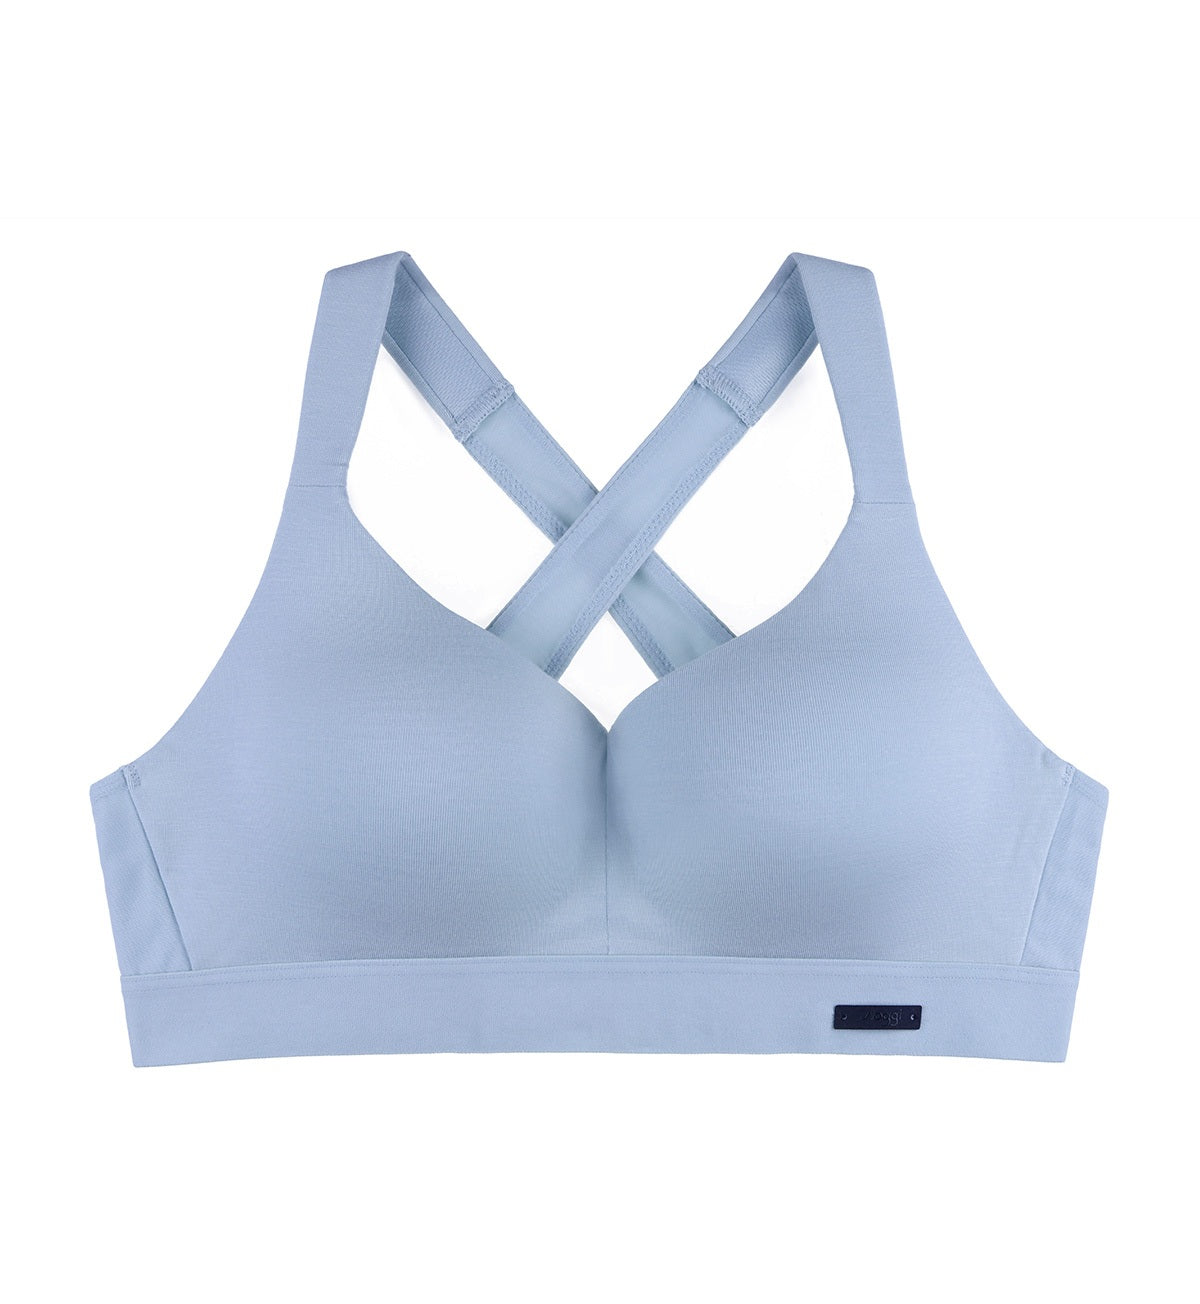 36C White Bralette, White Sports Bra, Workout Bra, Yoga Bra, Comfortable  Sleep Bra, Bra for Small Breasts, Supportive Convertible Bralette -   Hong Kong